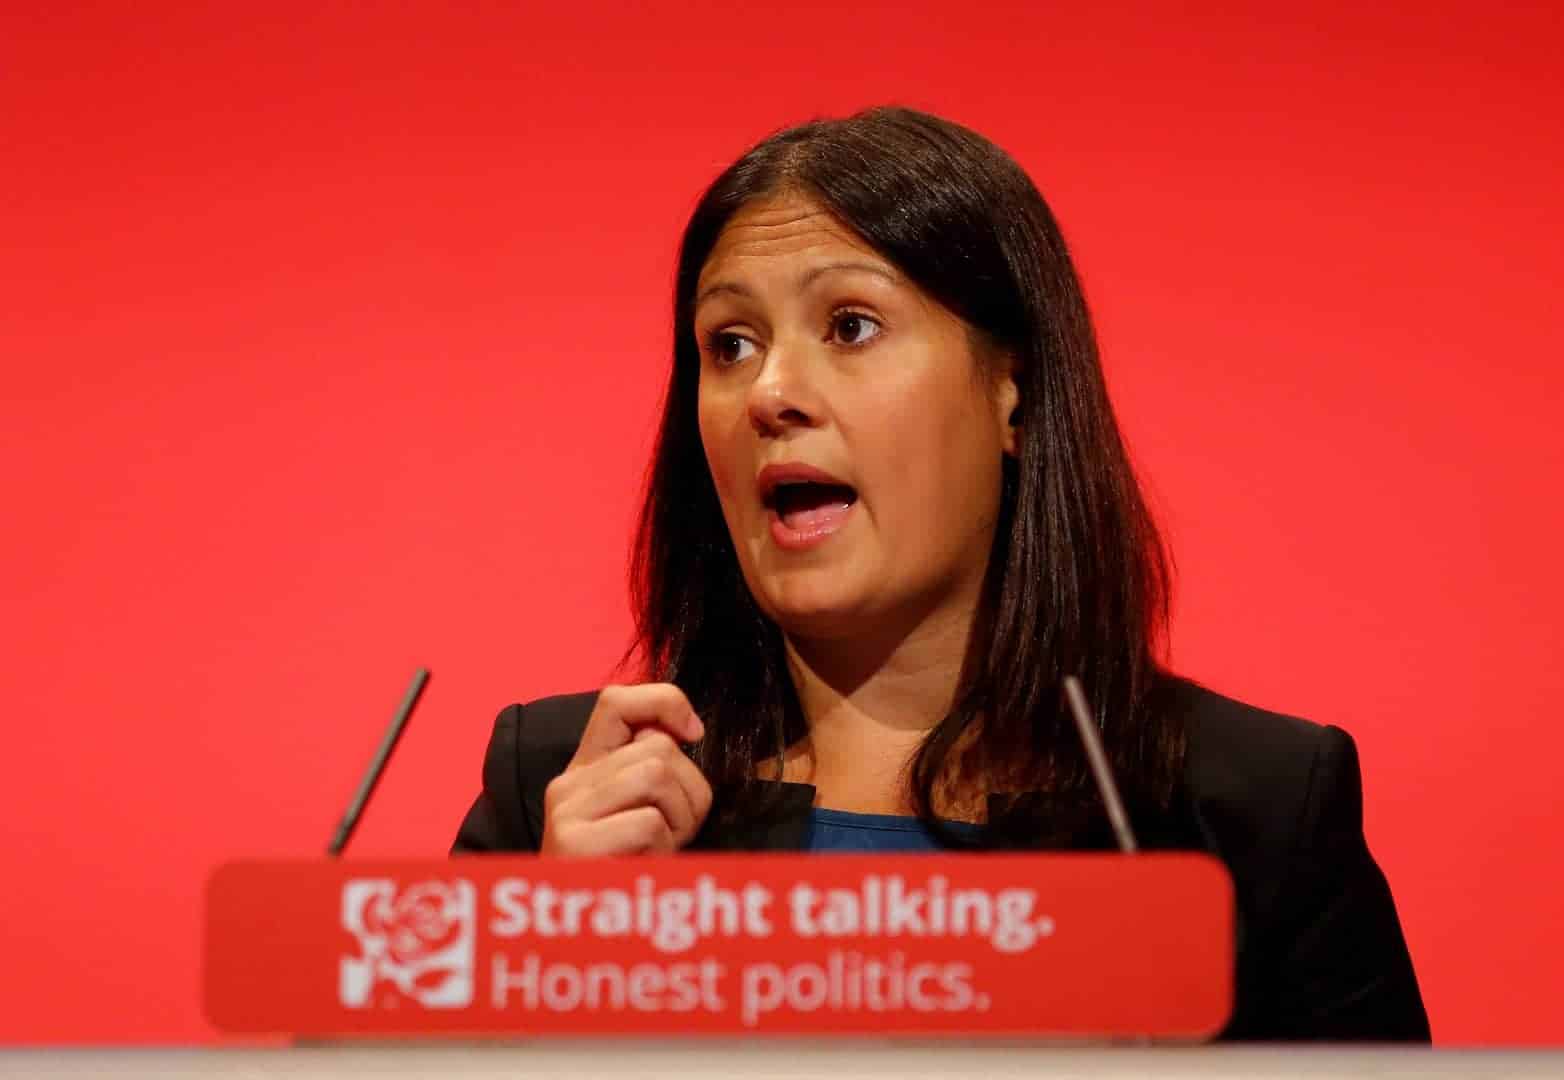 Labour leadership race: Odds slashed in half for outsider Lisa Nandy after first hustings